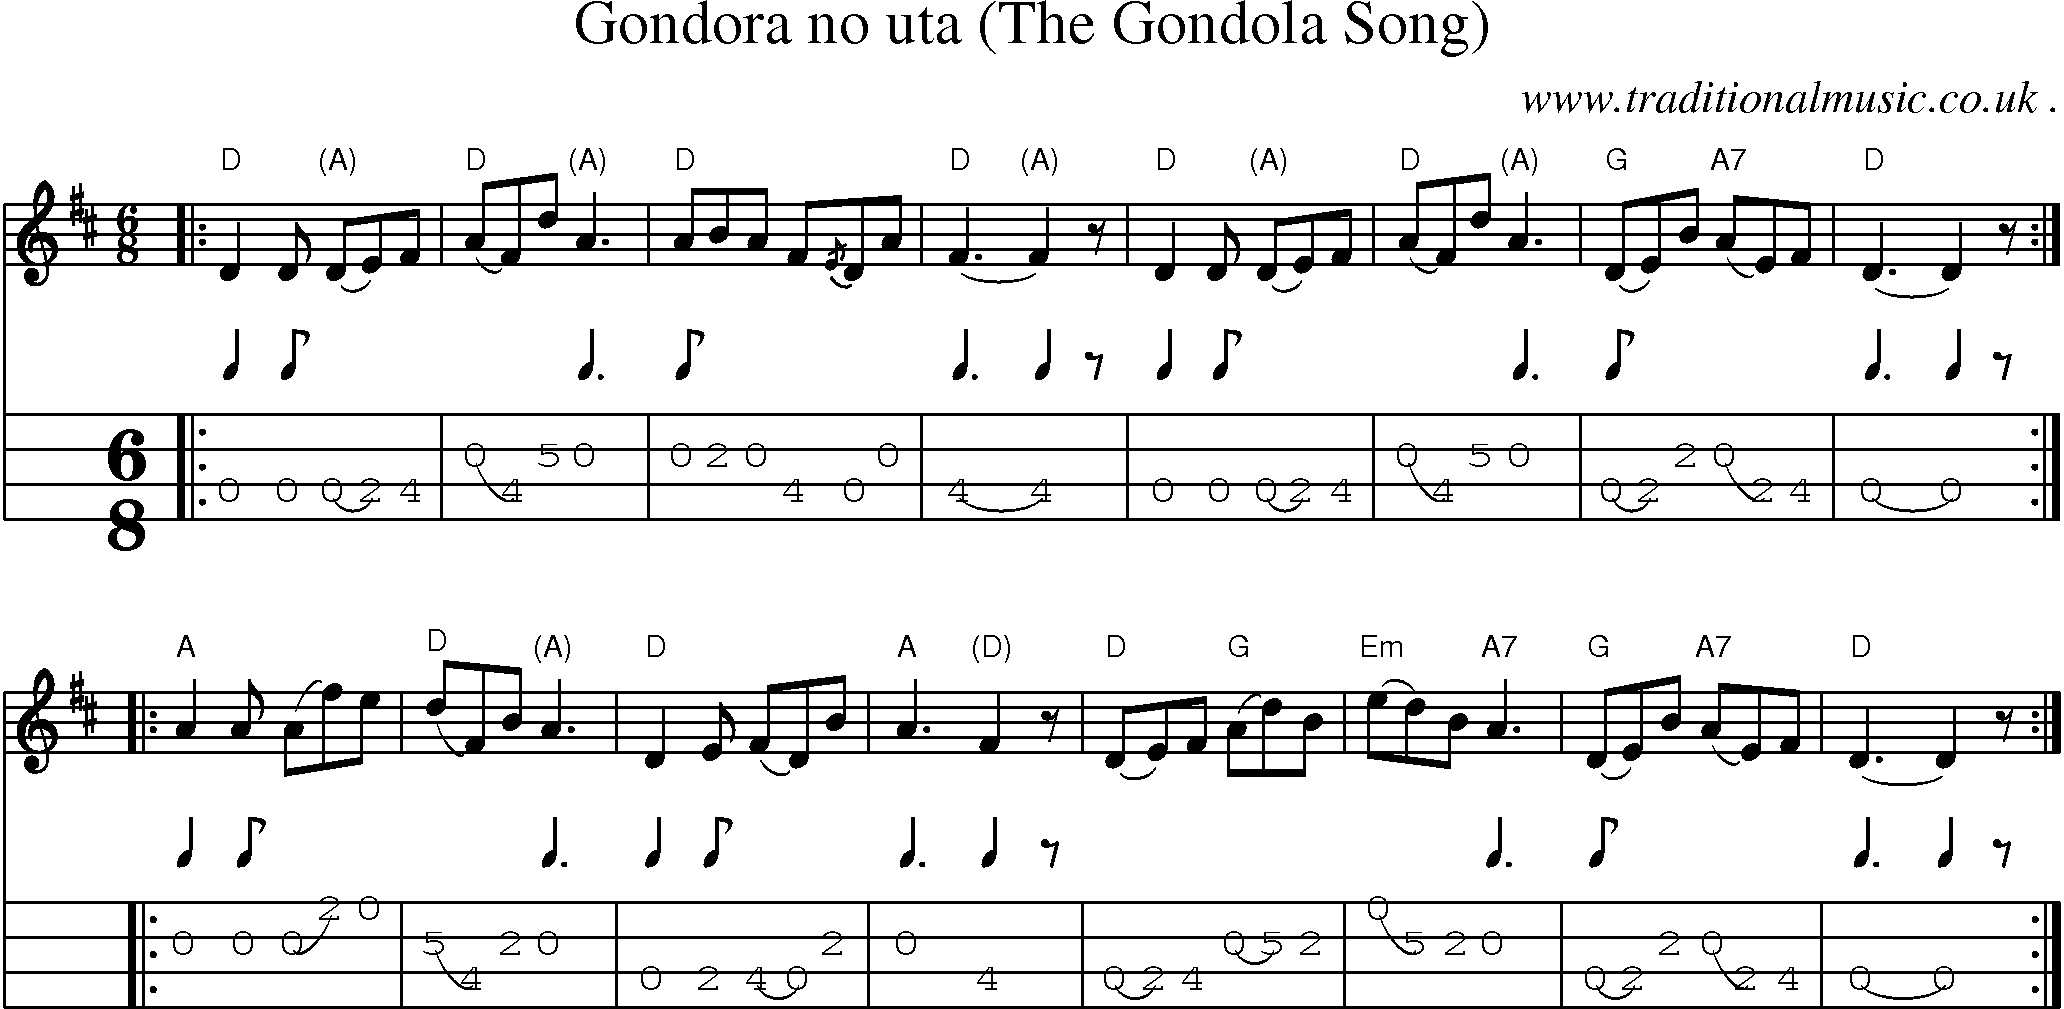 Sheet-music  score, Chords and Mandolin Tabs for Gondora No Uta The Gondola Song